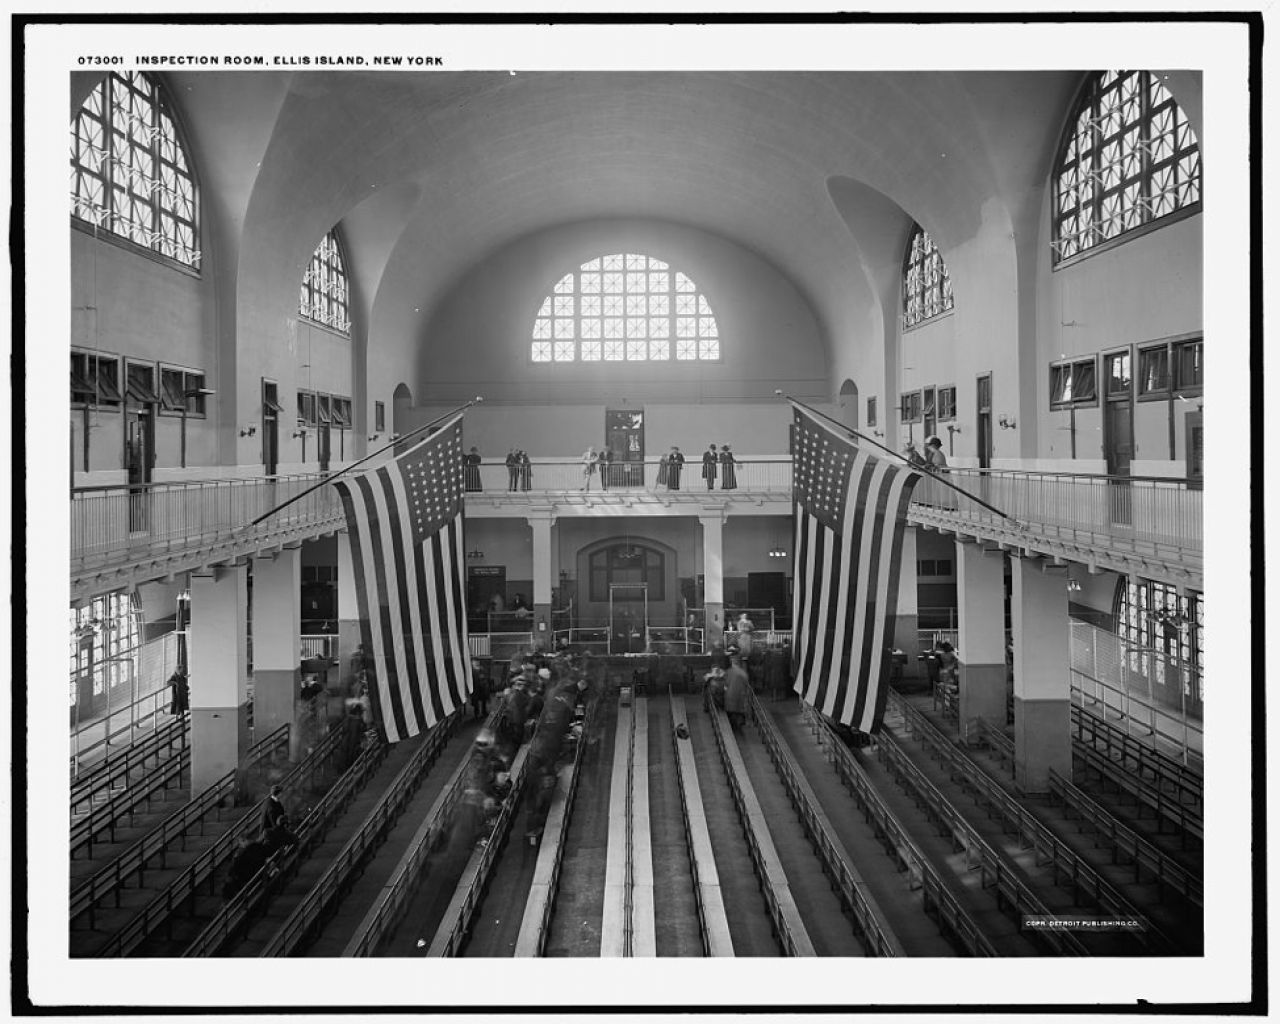 The inspection room at Ellis Island circa 1910-20.